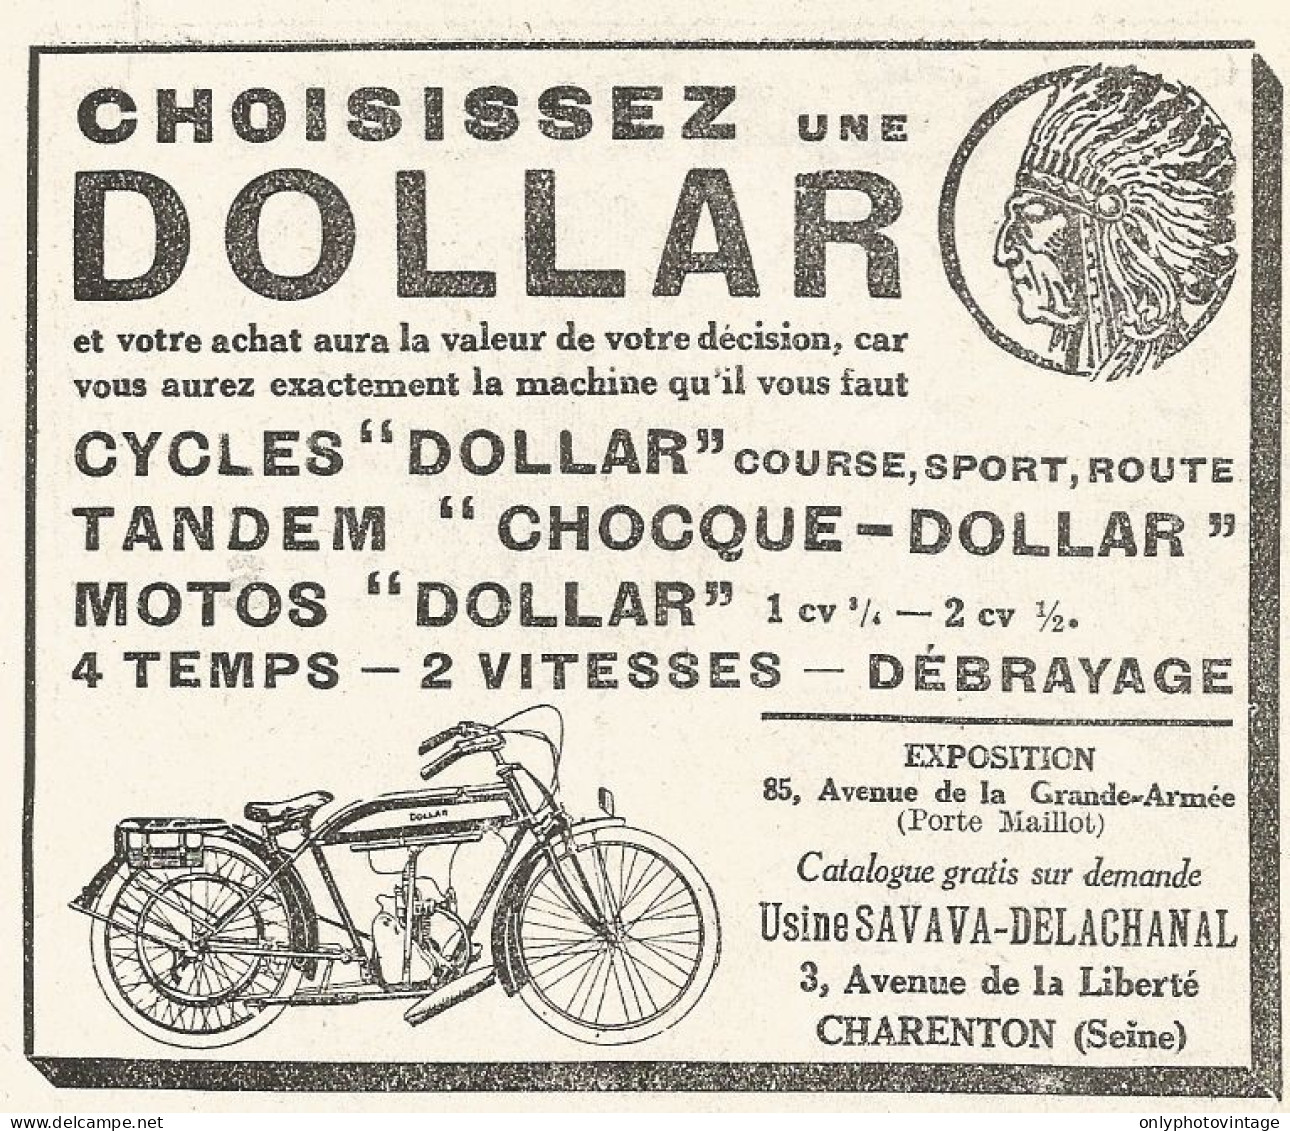 Motocicletta DOLLAR - Pubblicitï¿½ Del 1925 - Old Advertising - Publicités